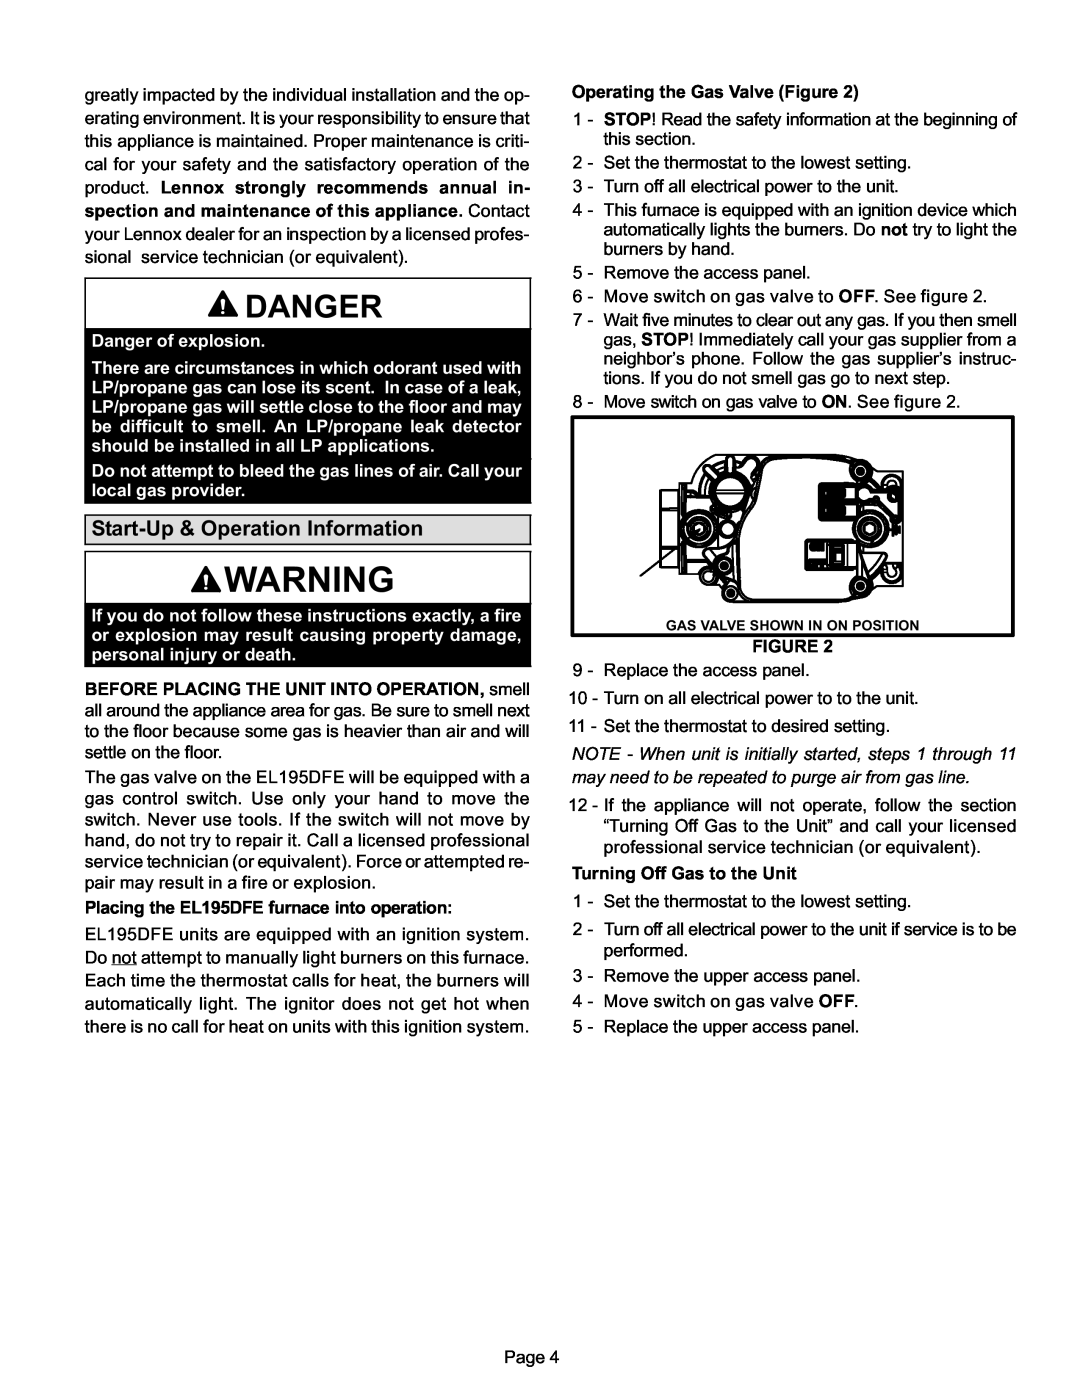 Lennox International Inc Gas Furnace, EL195DFE Series manual Danger, Start−Up & Operation Information 